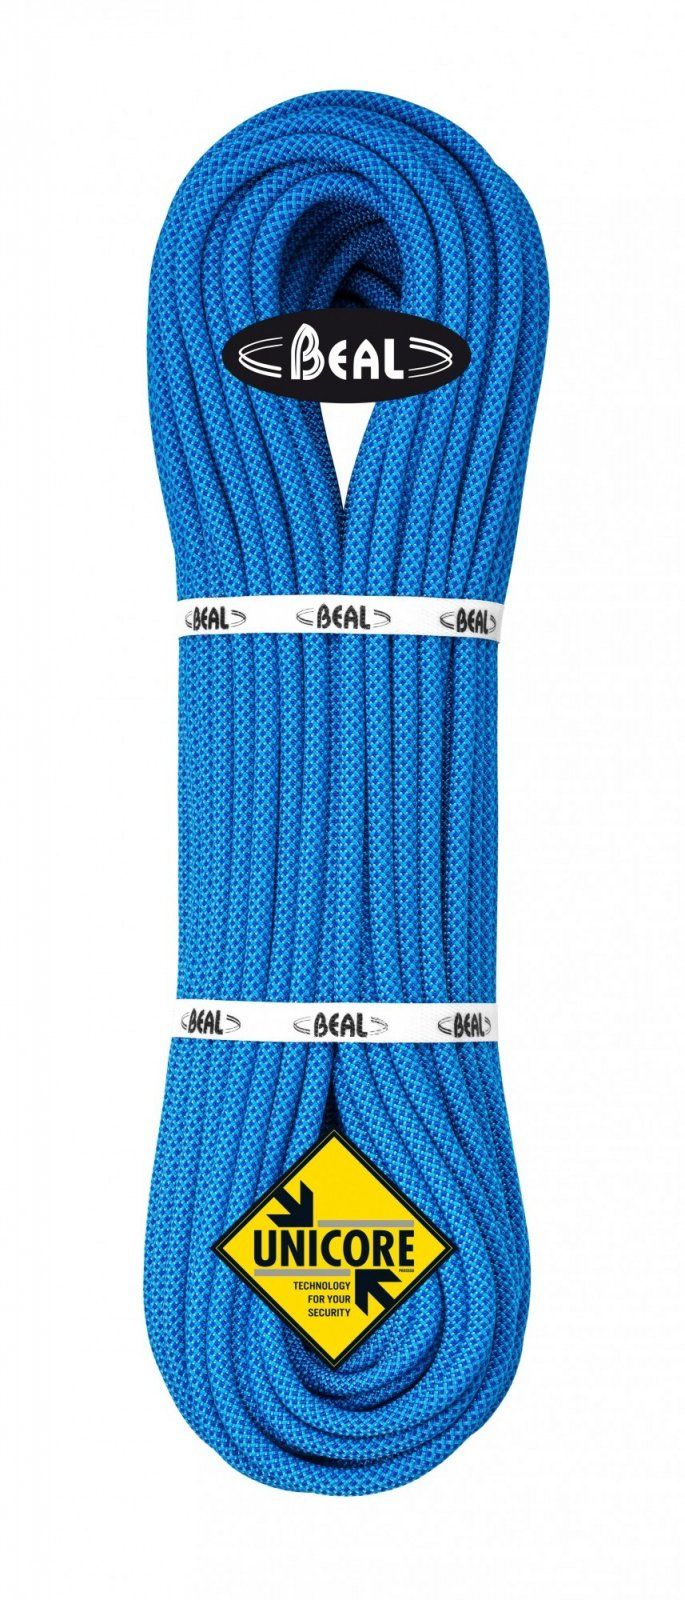 Beal Качественная динамическая веревка Beal Joker Golden Dry Unicore 9.1 мм